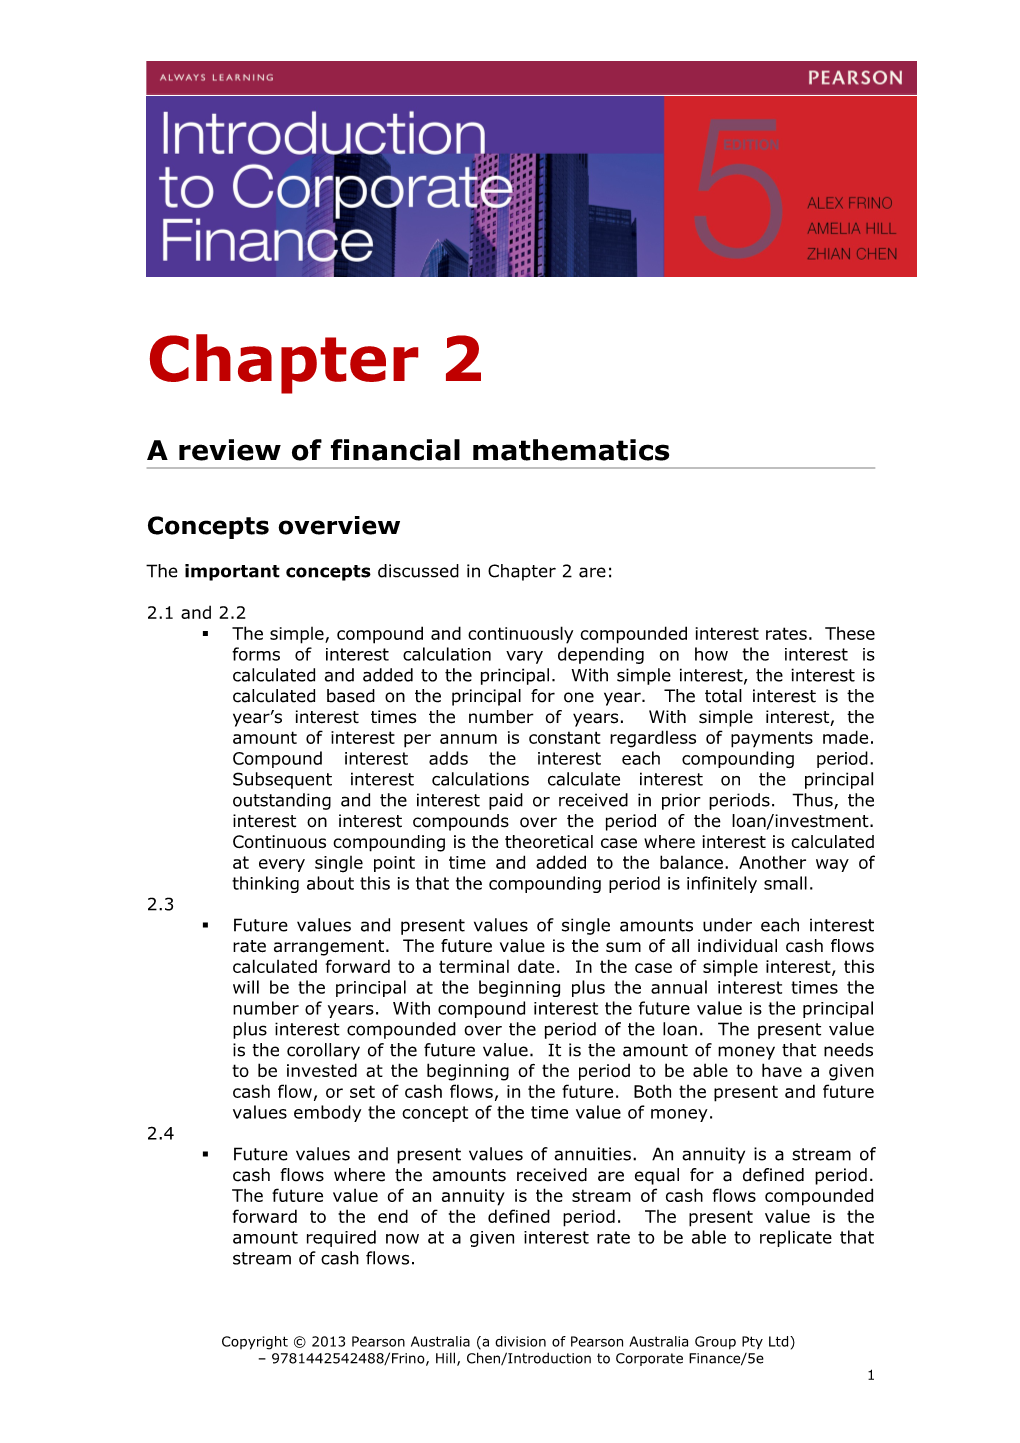 A Review of Financial Mathematics